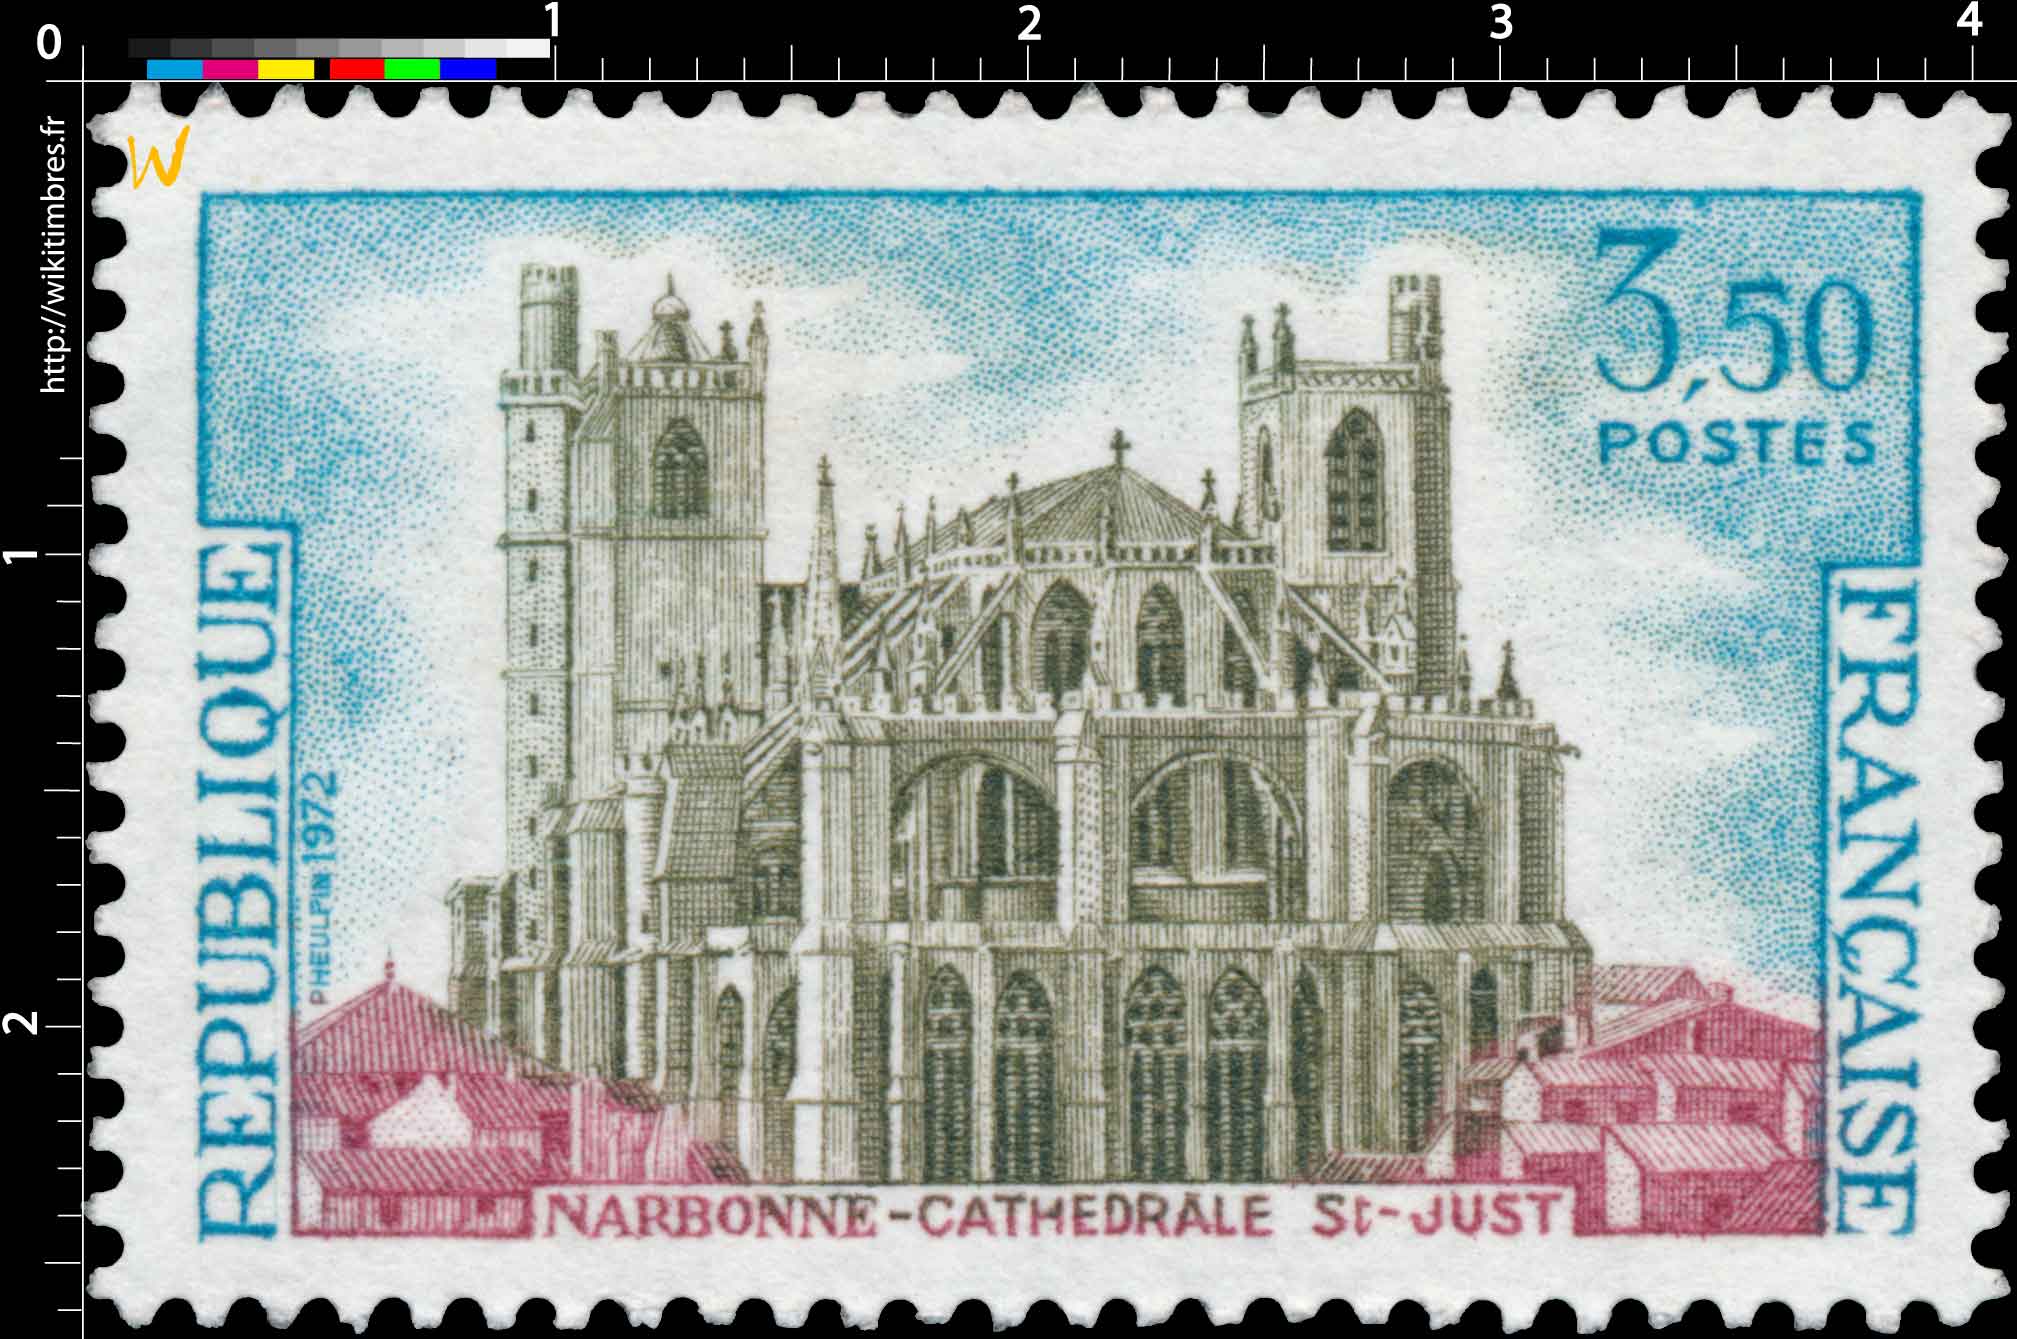 1972 NARBONNE - CATHÉDRALE St-JUST